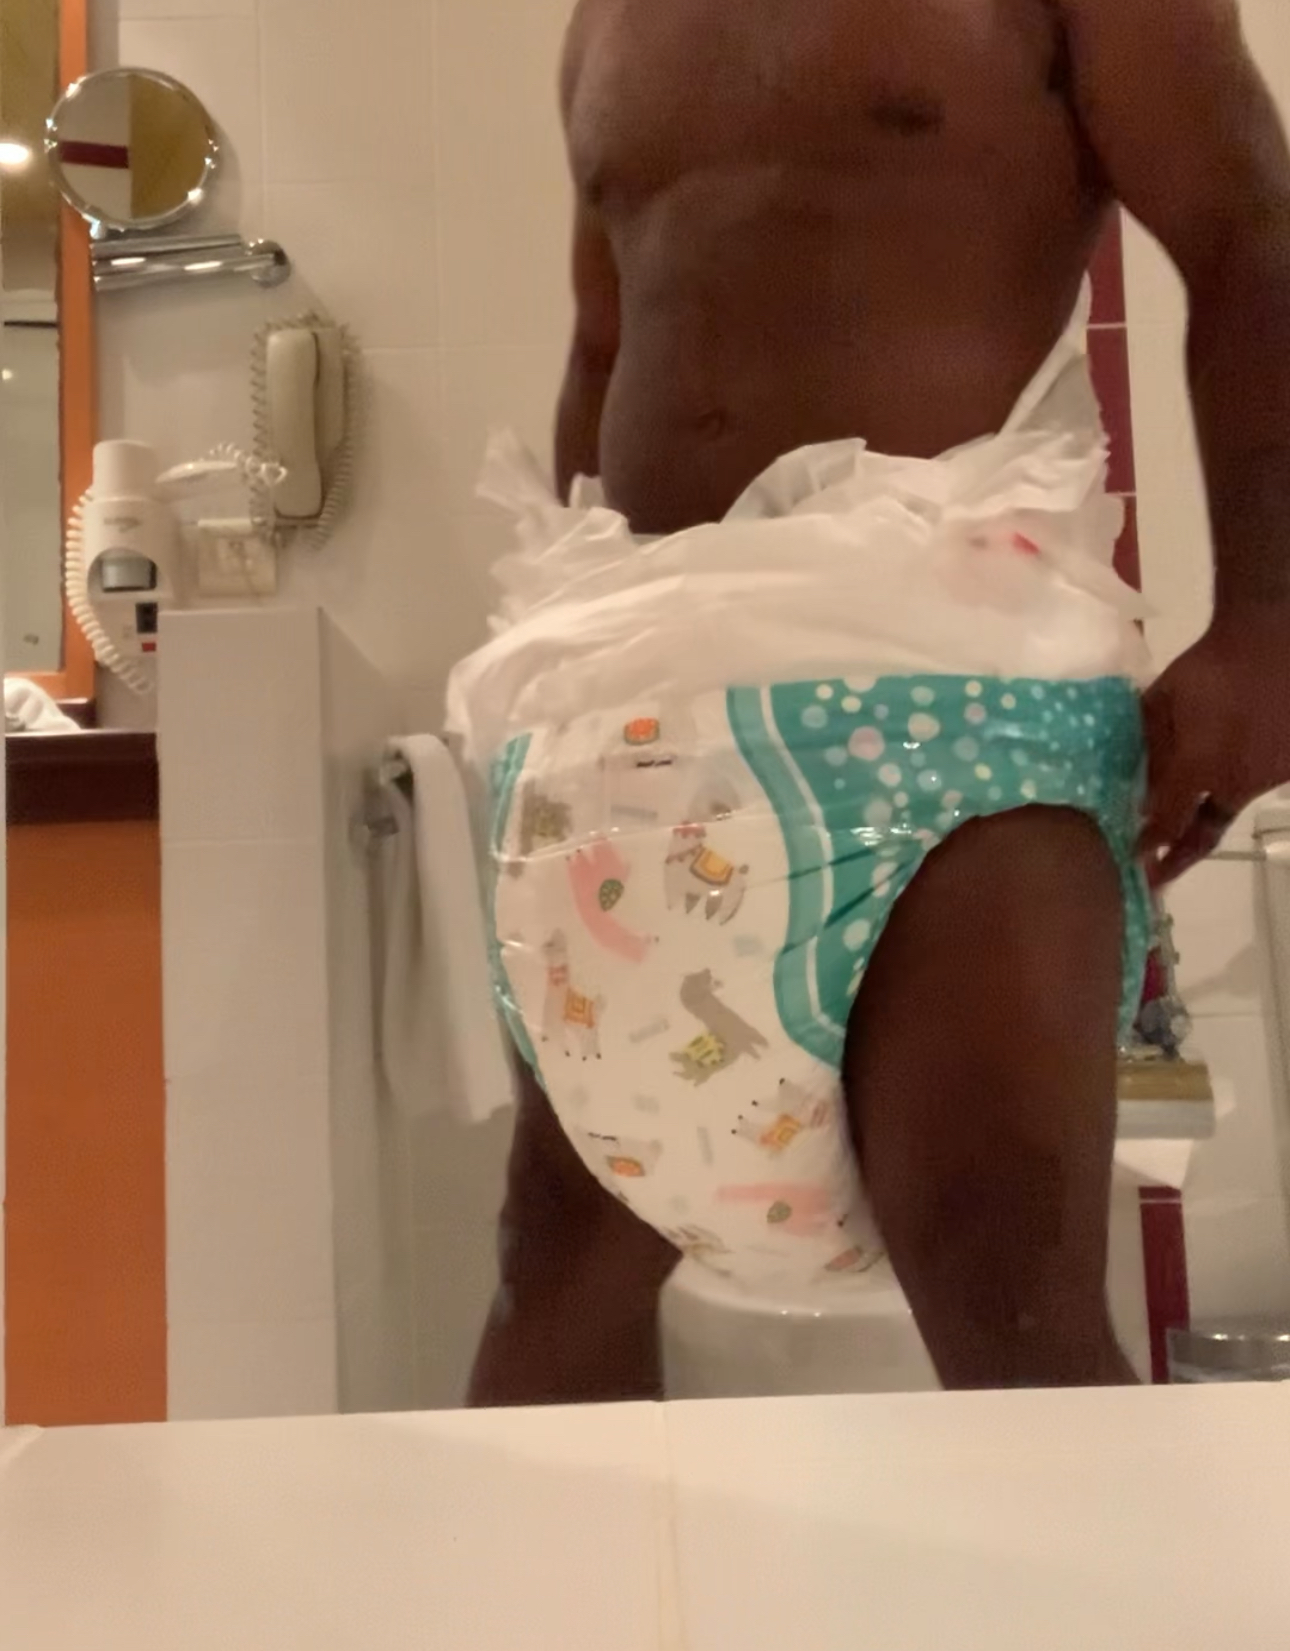 Biggest thick diaper